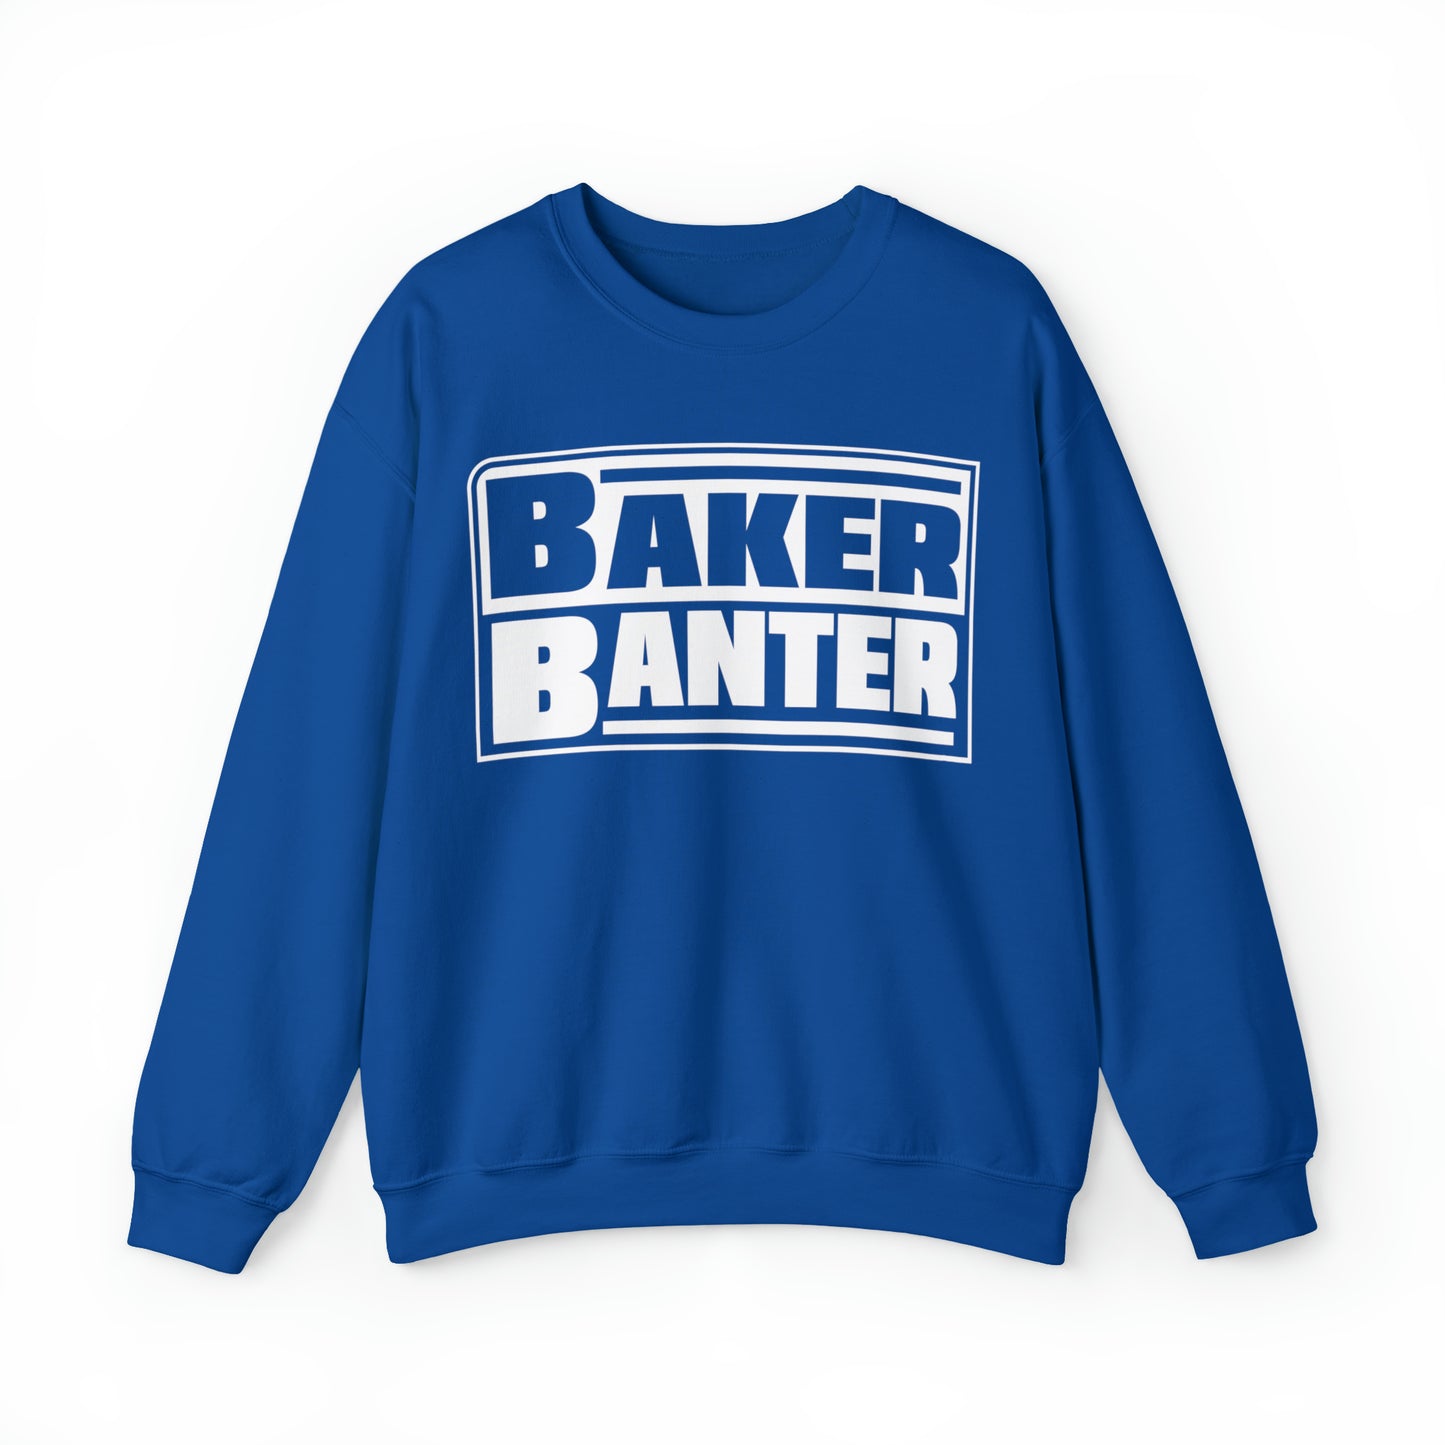 Baker Banter Friday Night Wrestling Unisex Crewneck Sweatshirt - Blue/White, White/Blue, Black/White